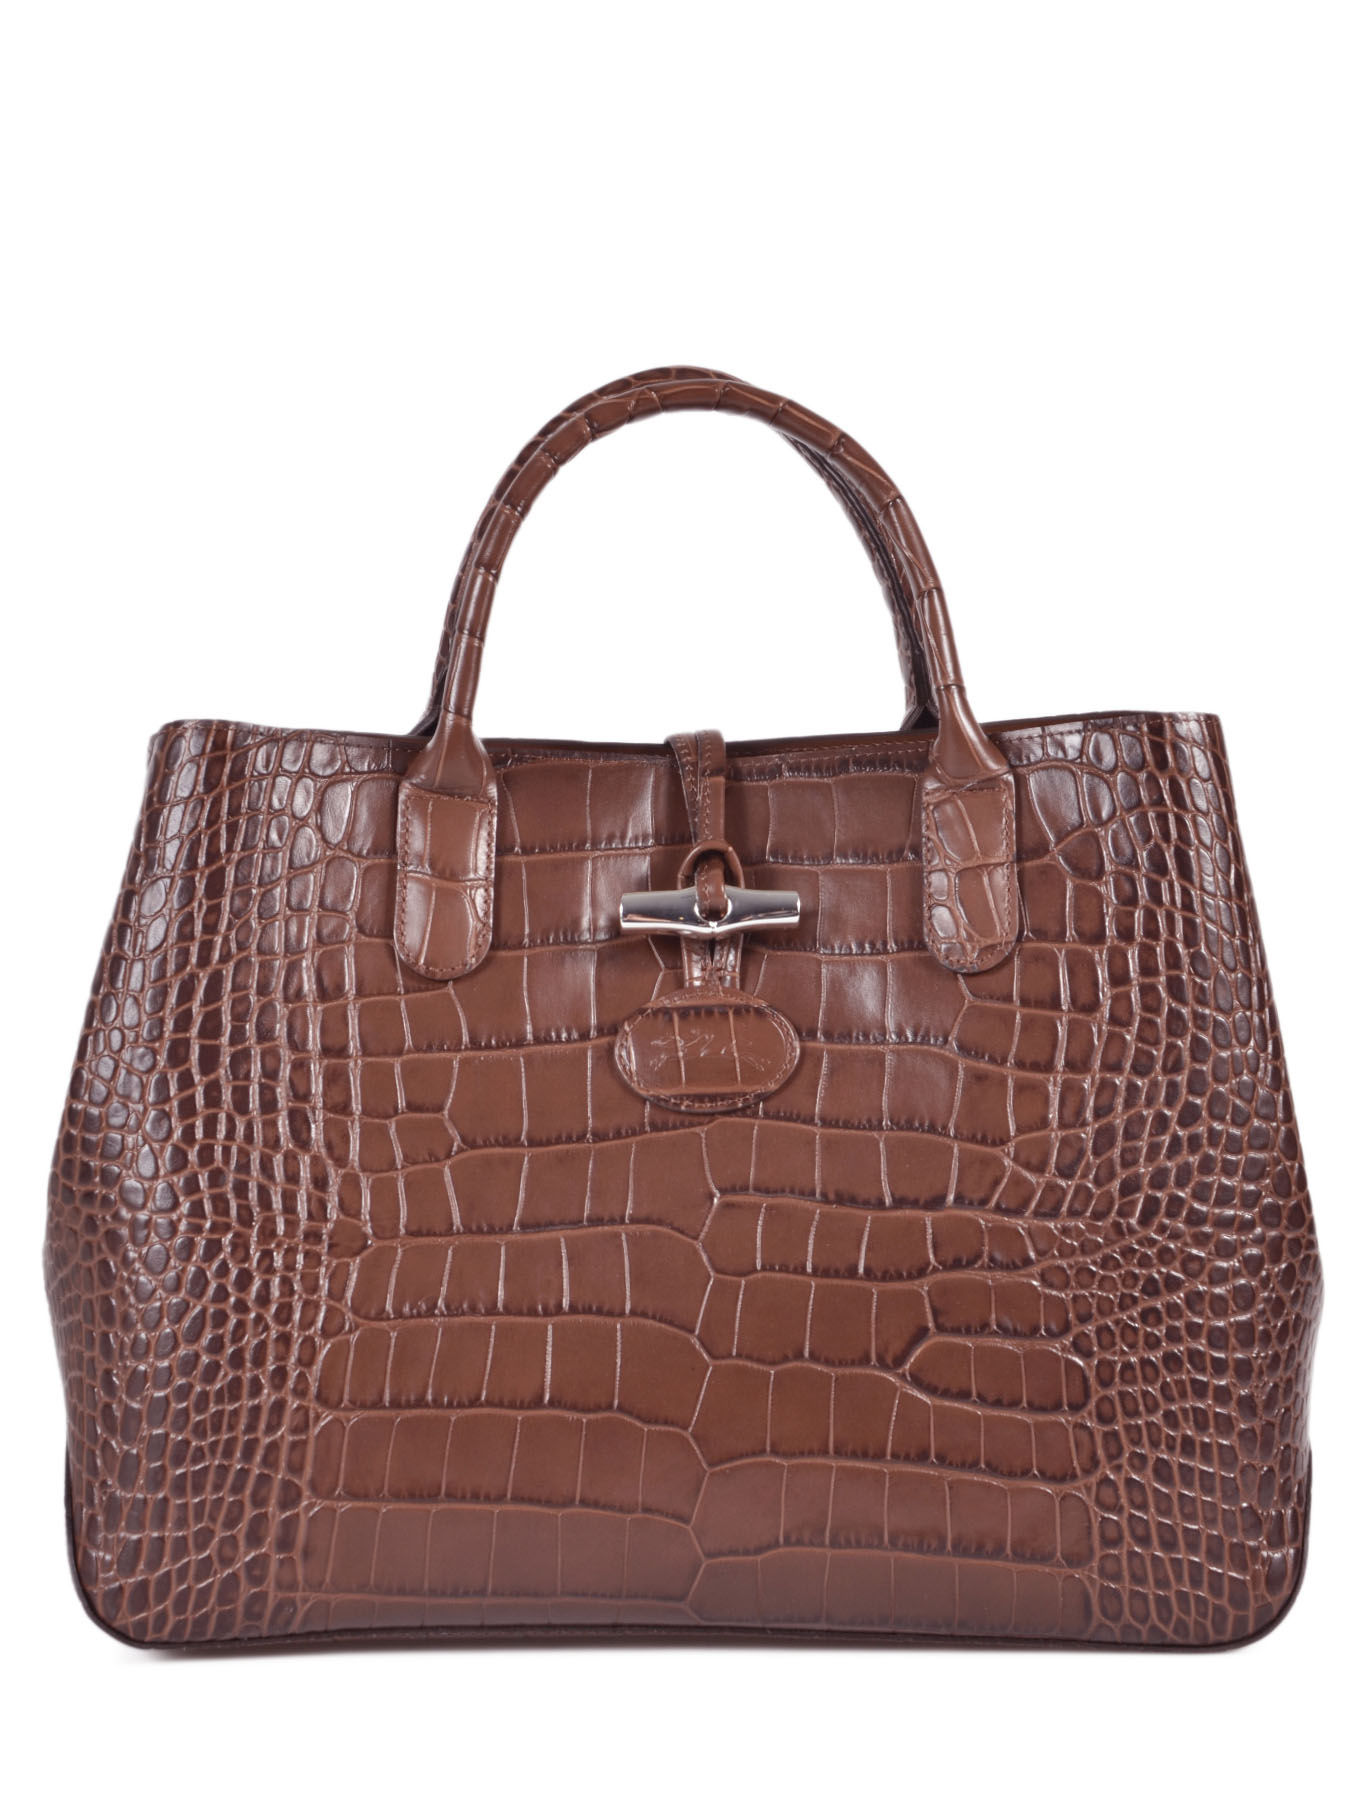 Longchamp Handbag Roseau croco - Best prices